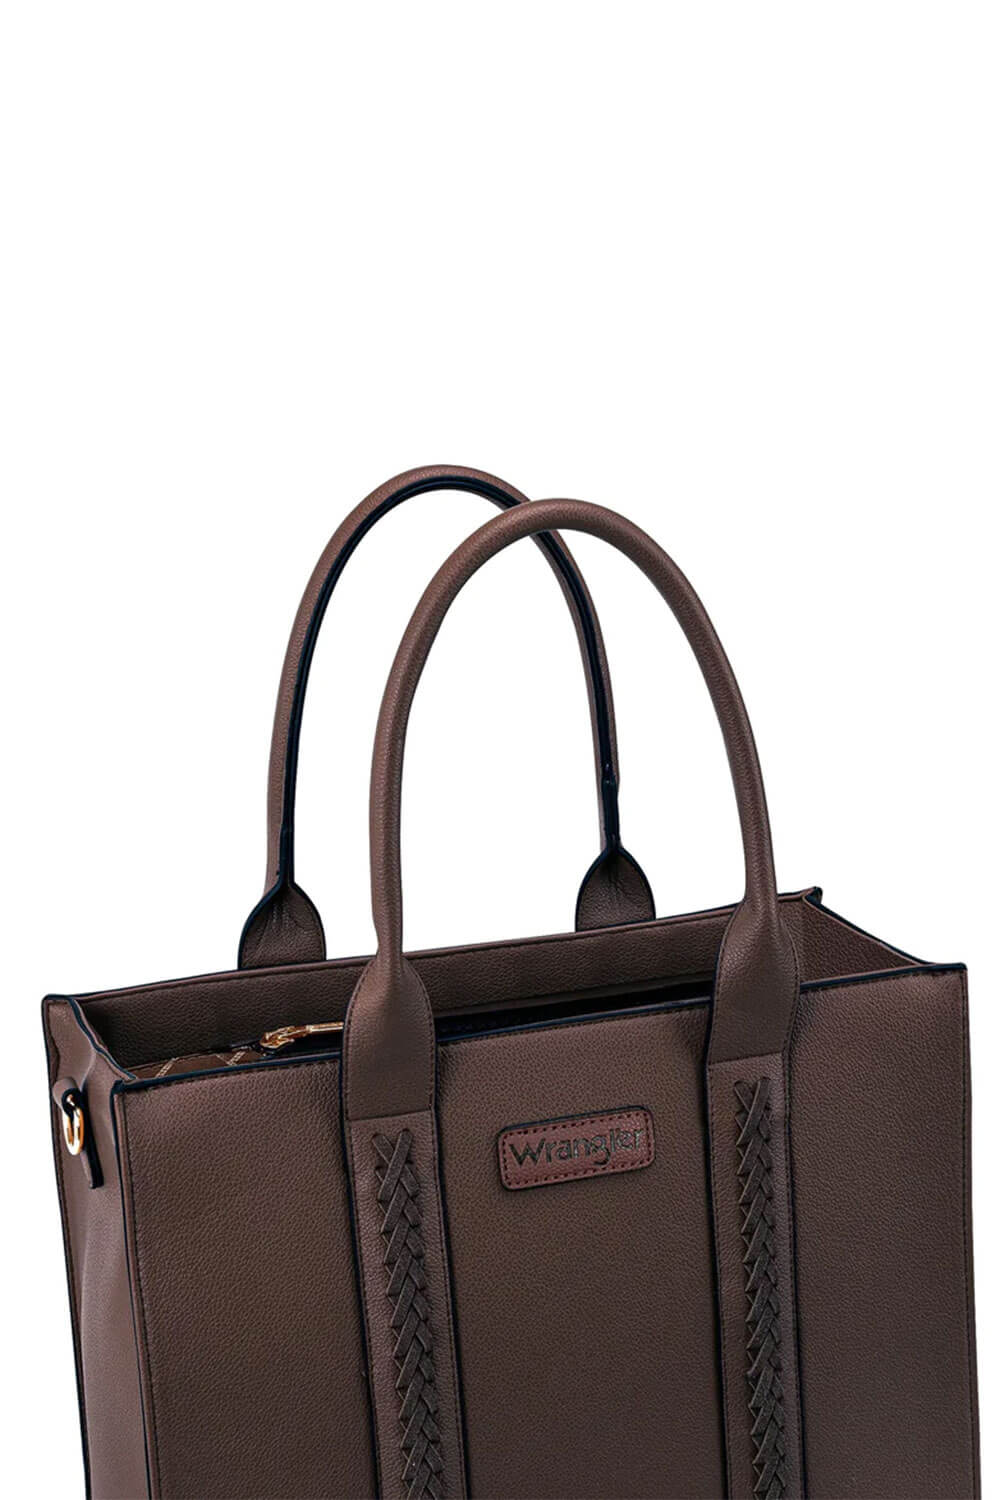 Buy Wrangler Tote Bag Large Satchel with Zipper Top Handle Handbag for Women  WG70-8317-BG at Amazon.in